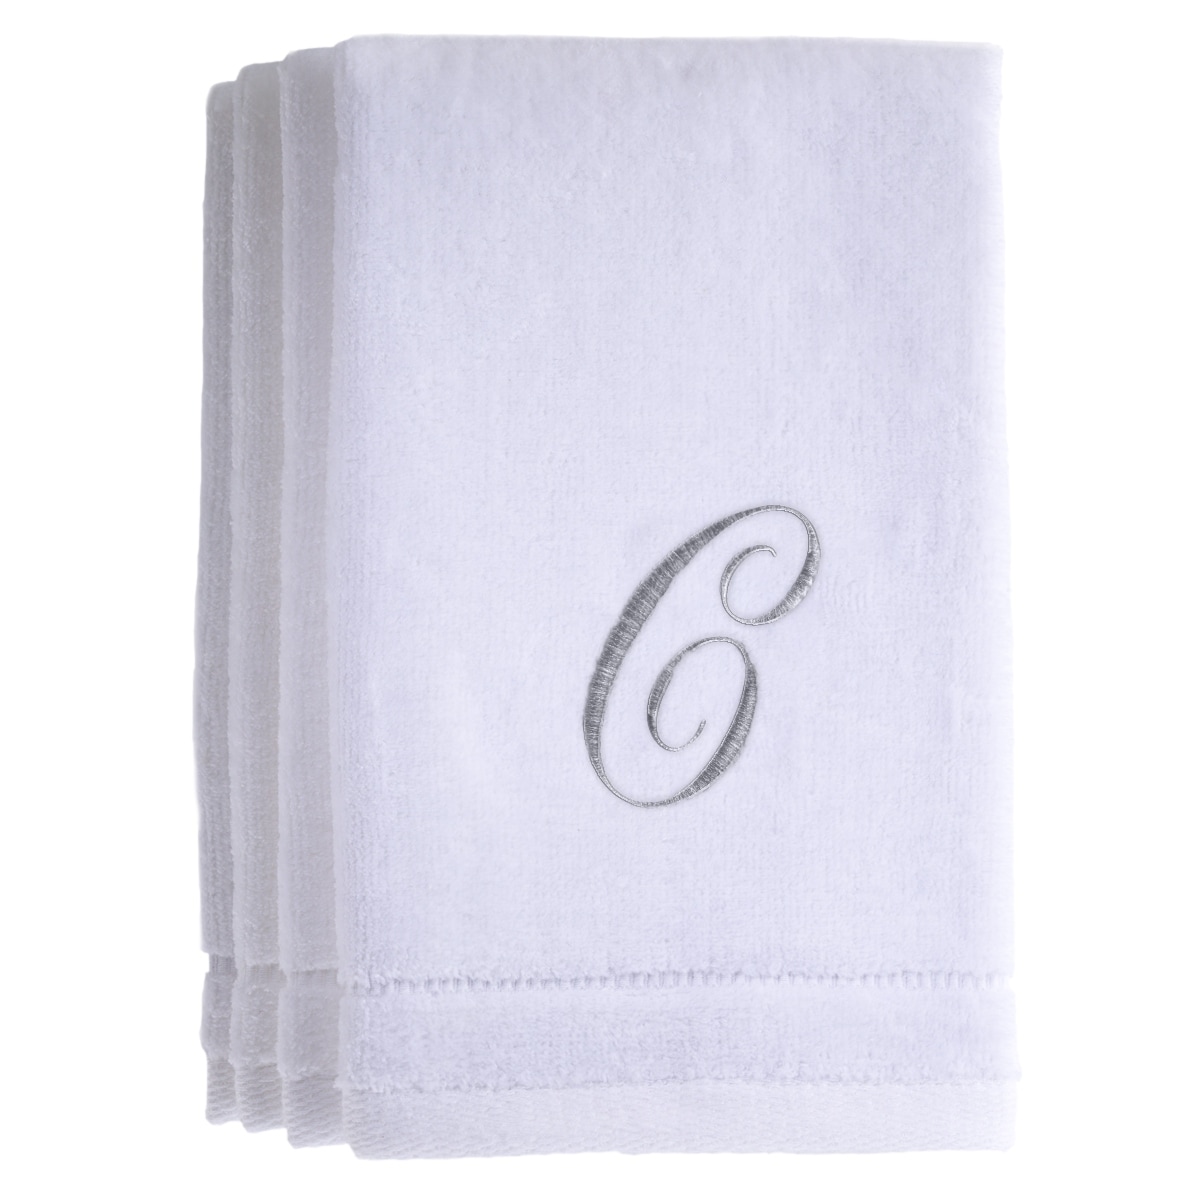 Bones Love Flowers Kitchen Towel Microfiber Dish Towel Tea Towel